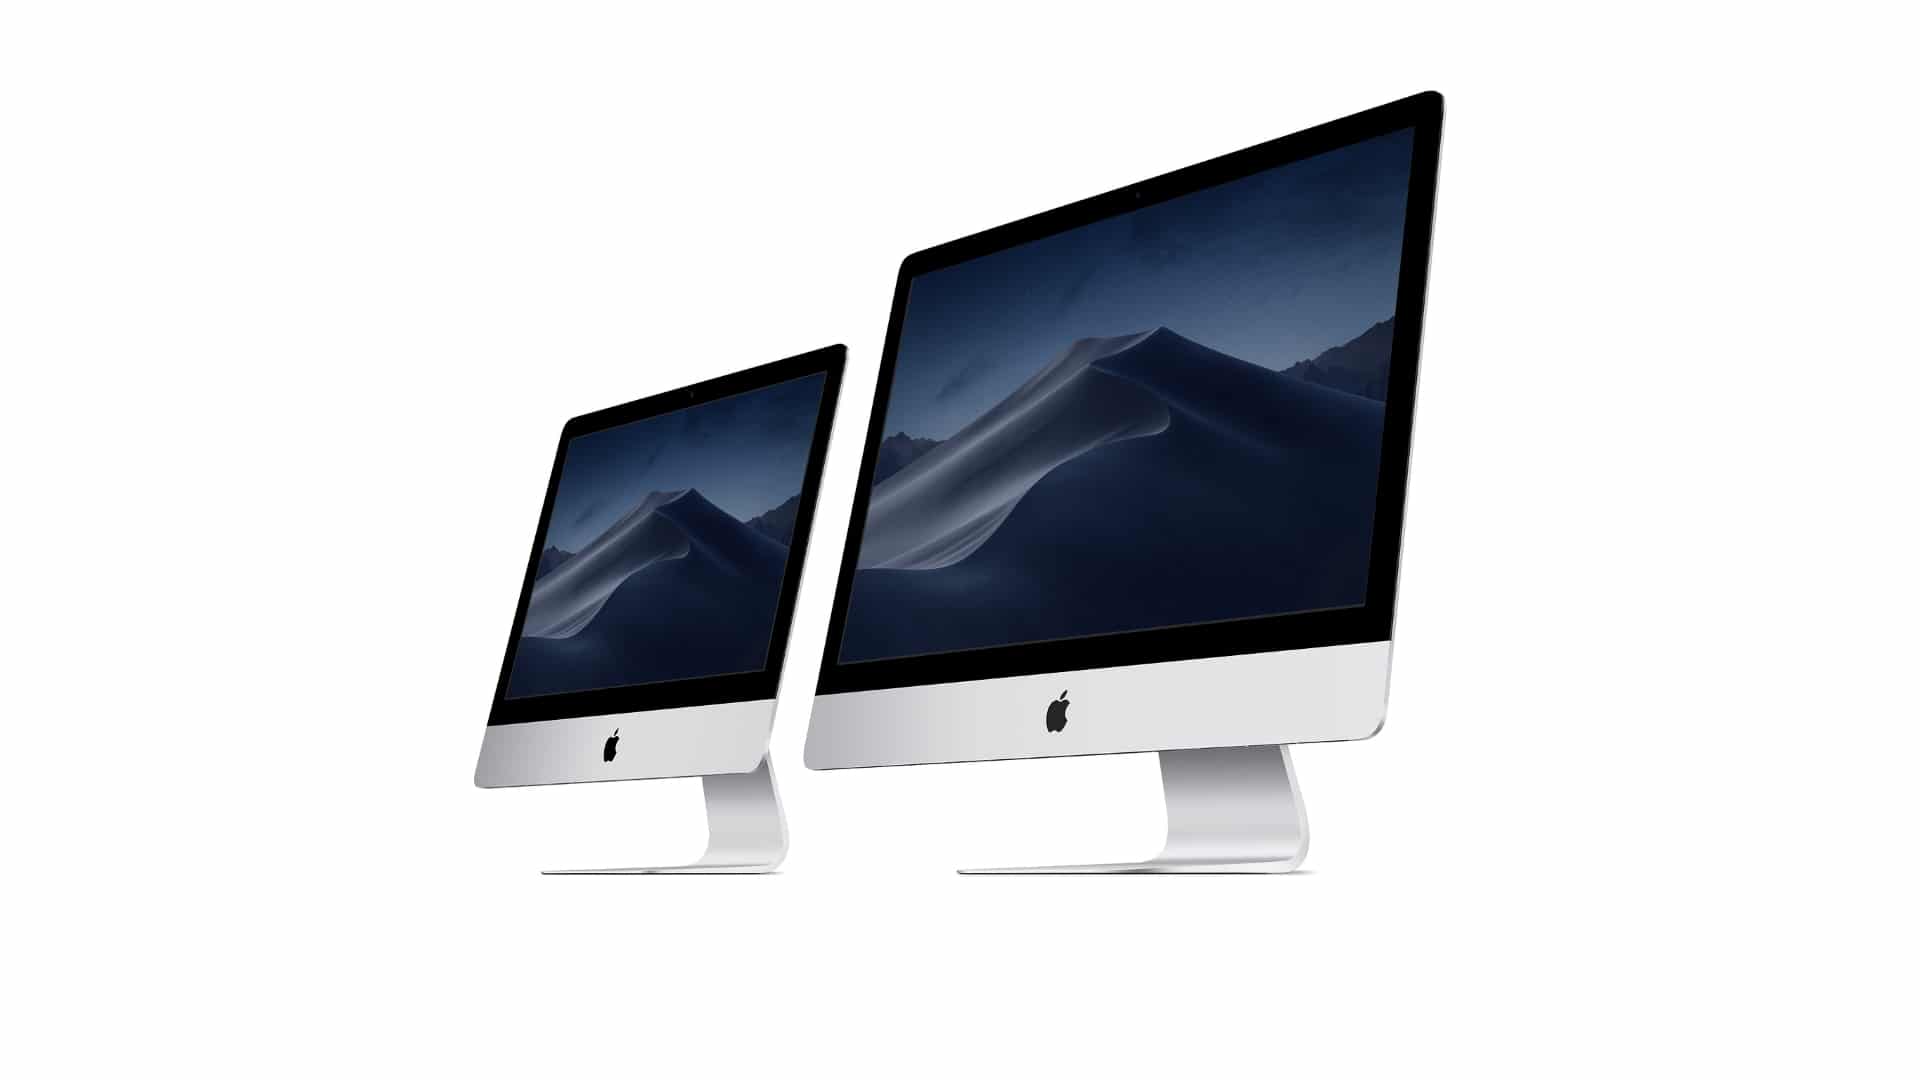 Apple iMac New